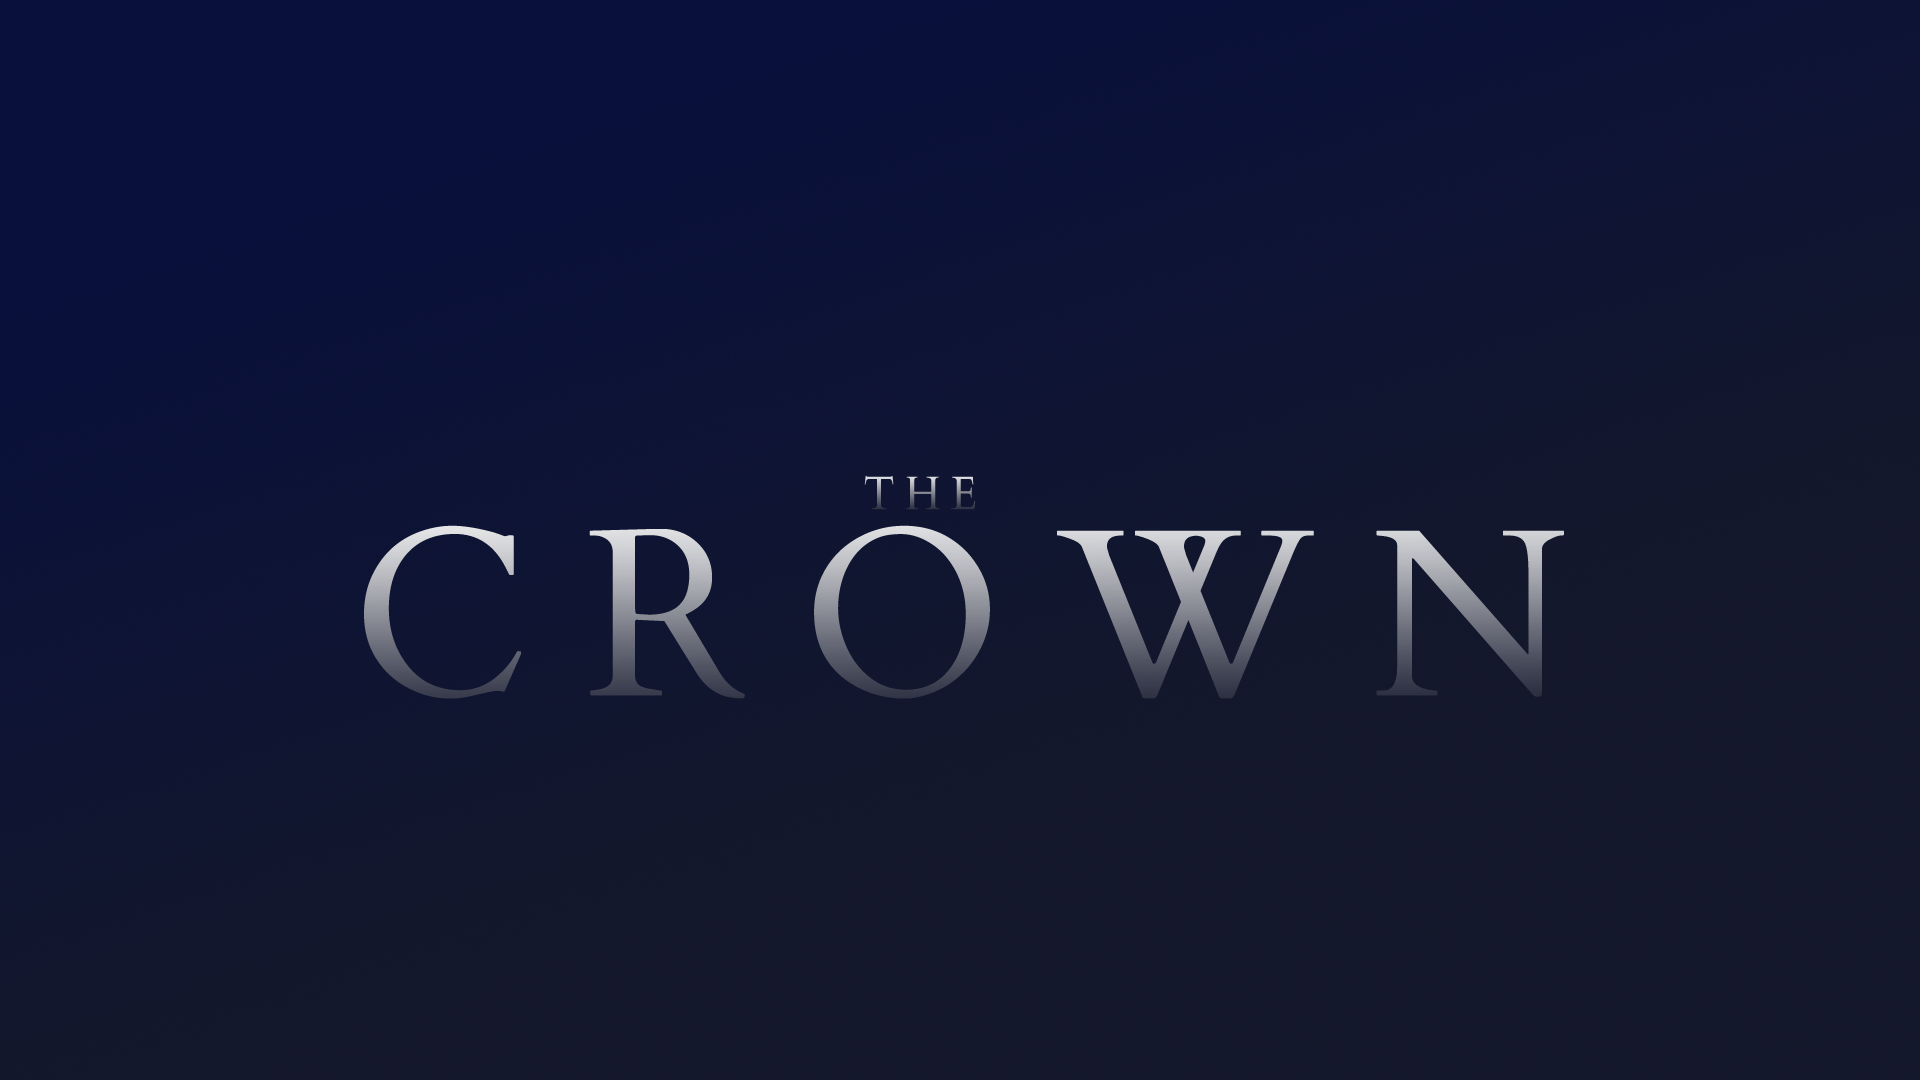 The crown Tour